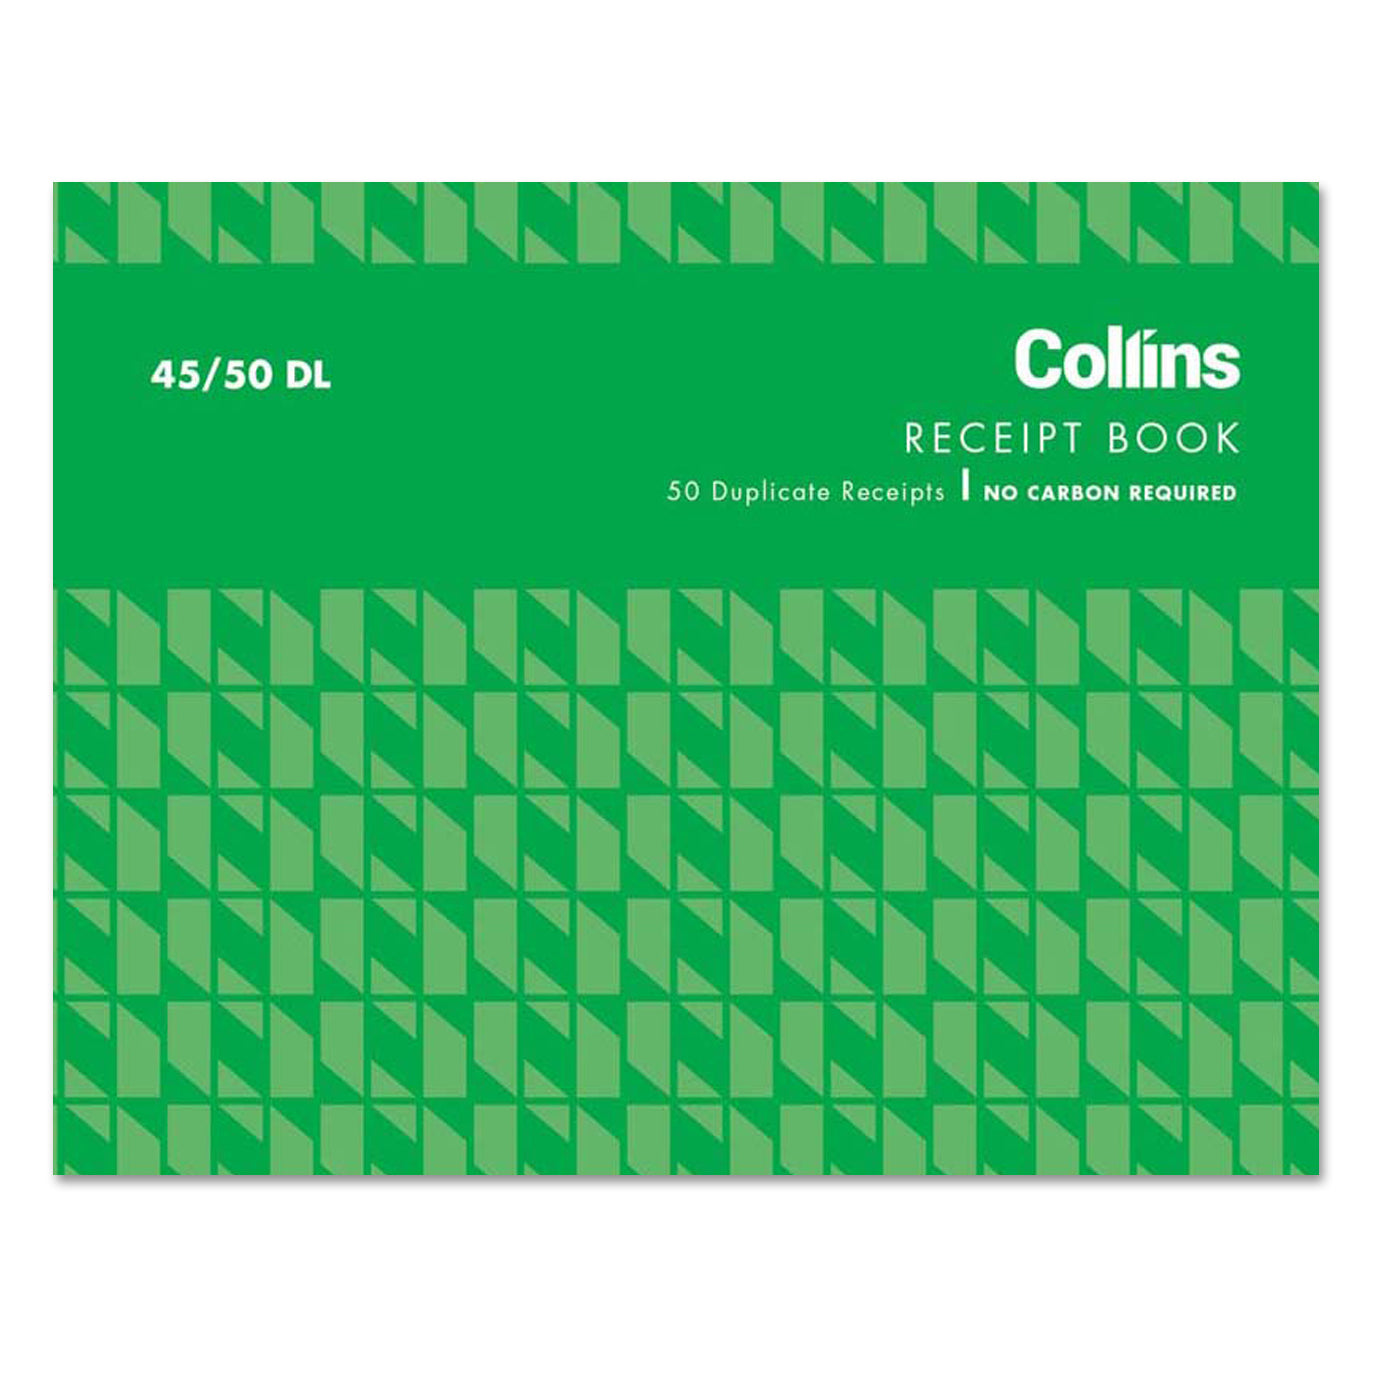 Collins Cash Receipt 45/50DL No Carbon Required 50 Duplicate Receipts